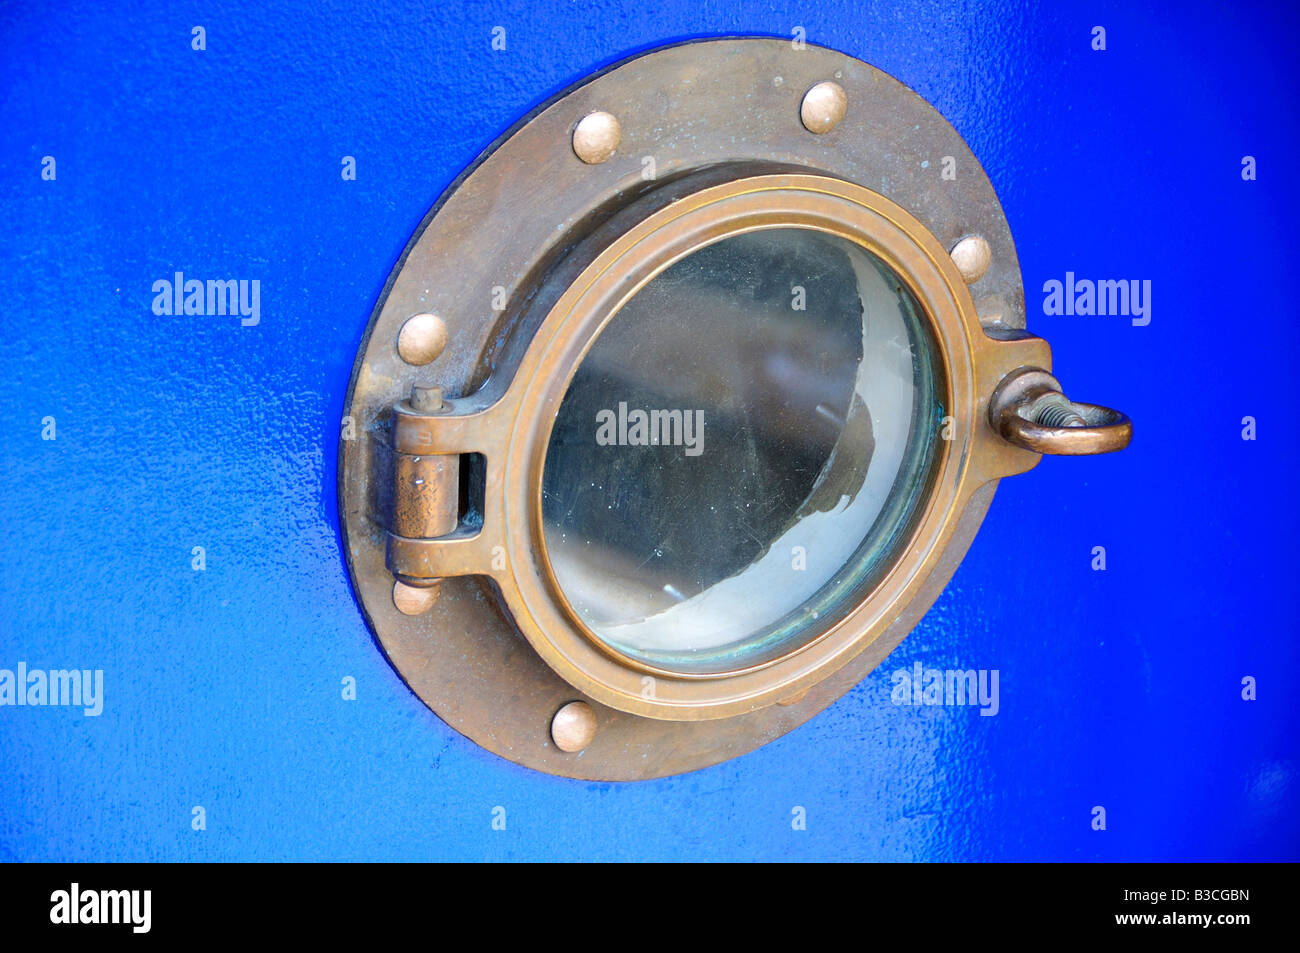 Porthole ship hi-res stock photography and images - Alamy